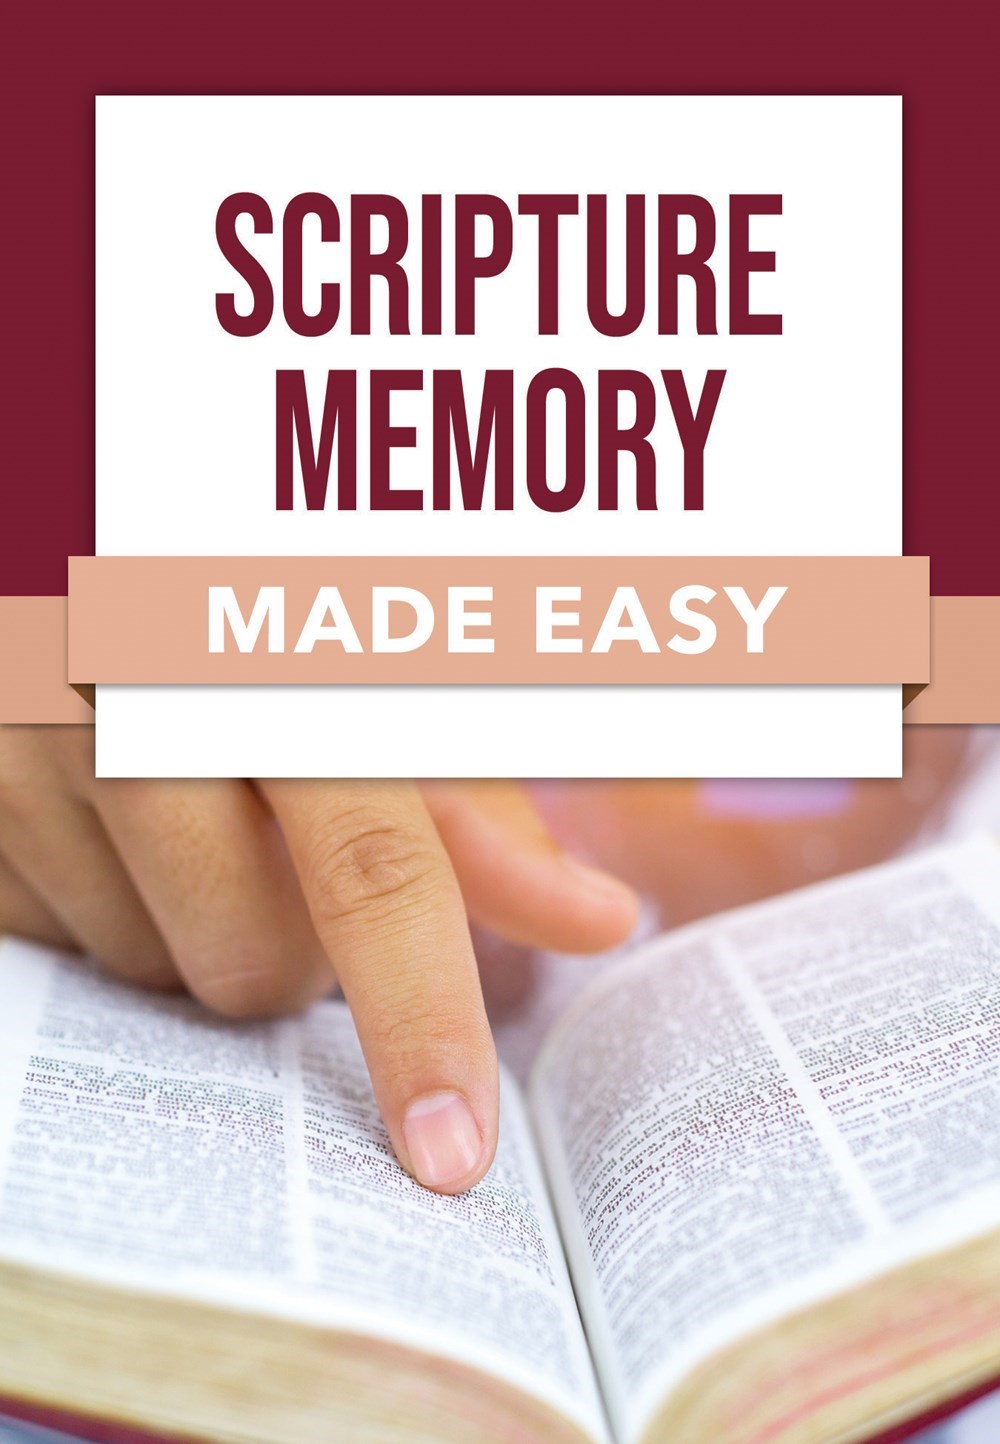 Scripture Memory Made Easy (Made Easy)